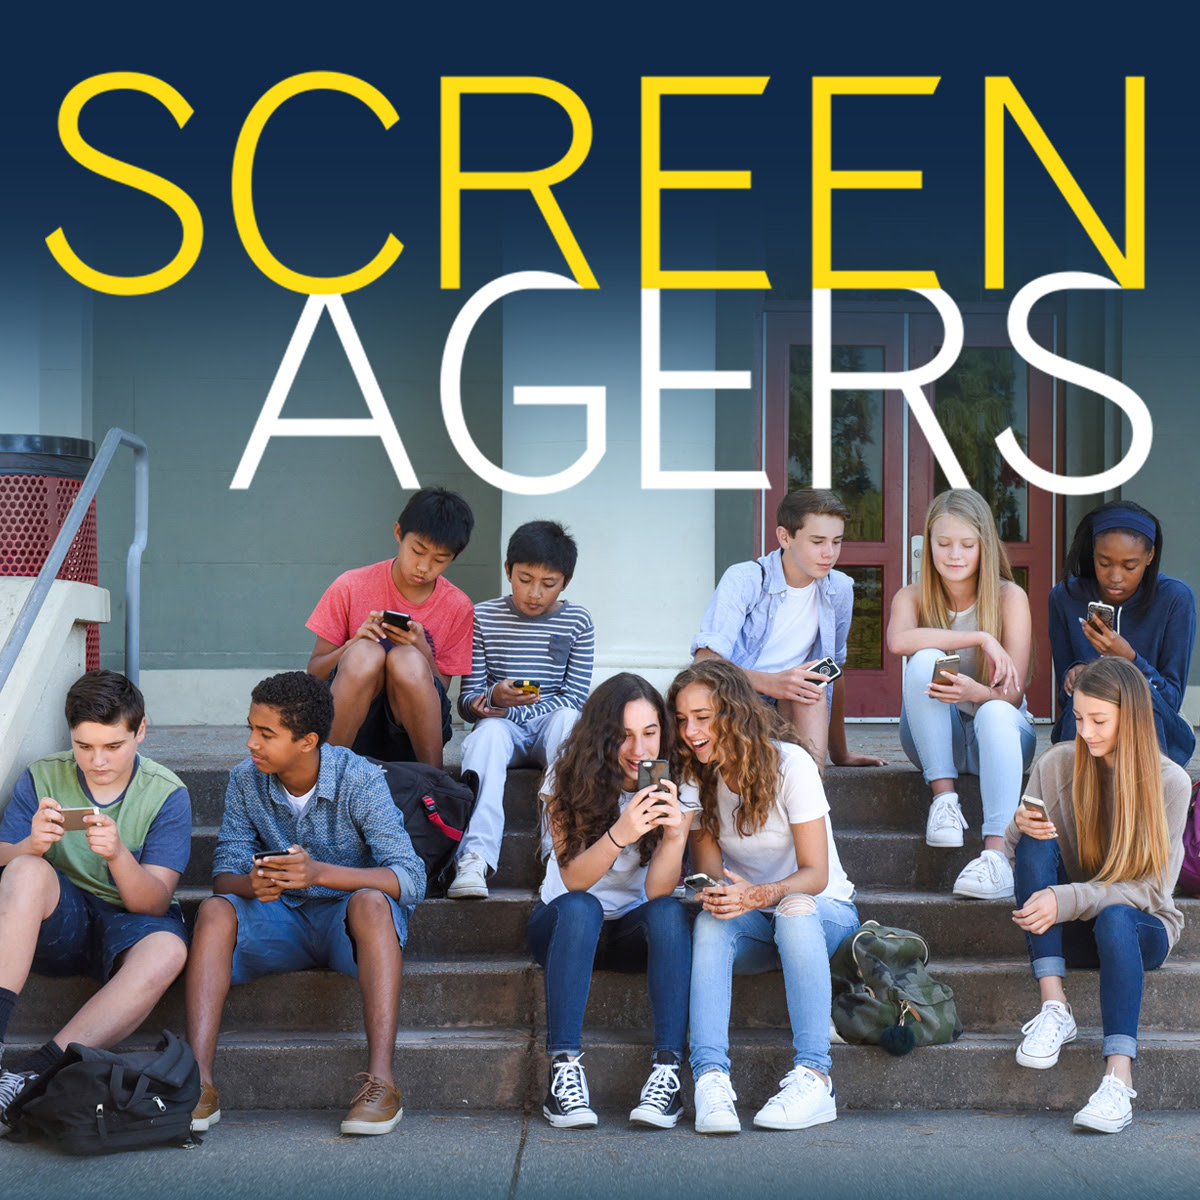 Screenagers Film Presented By Ellinwood Middle/High School